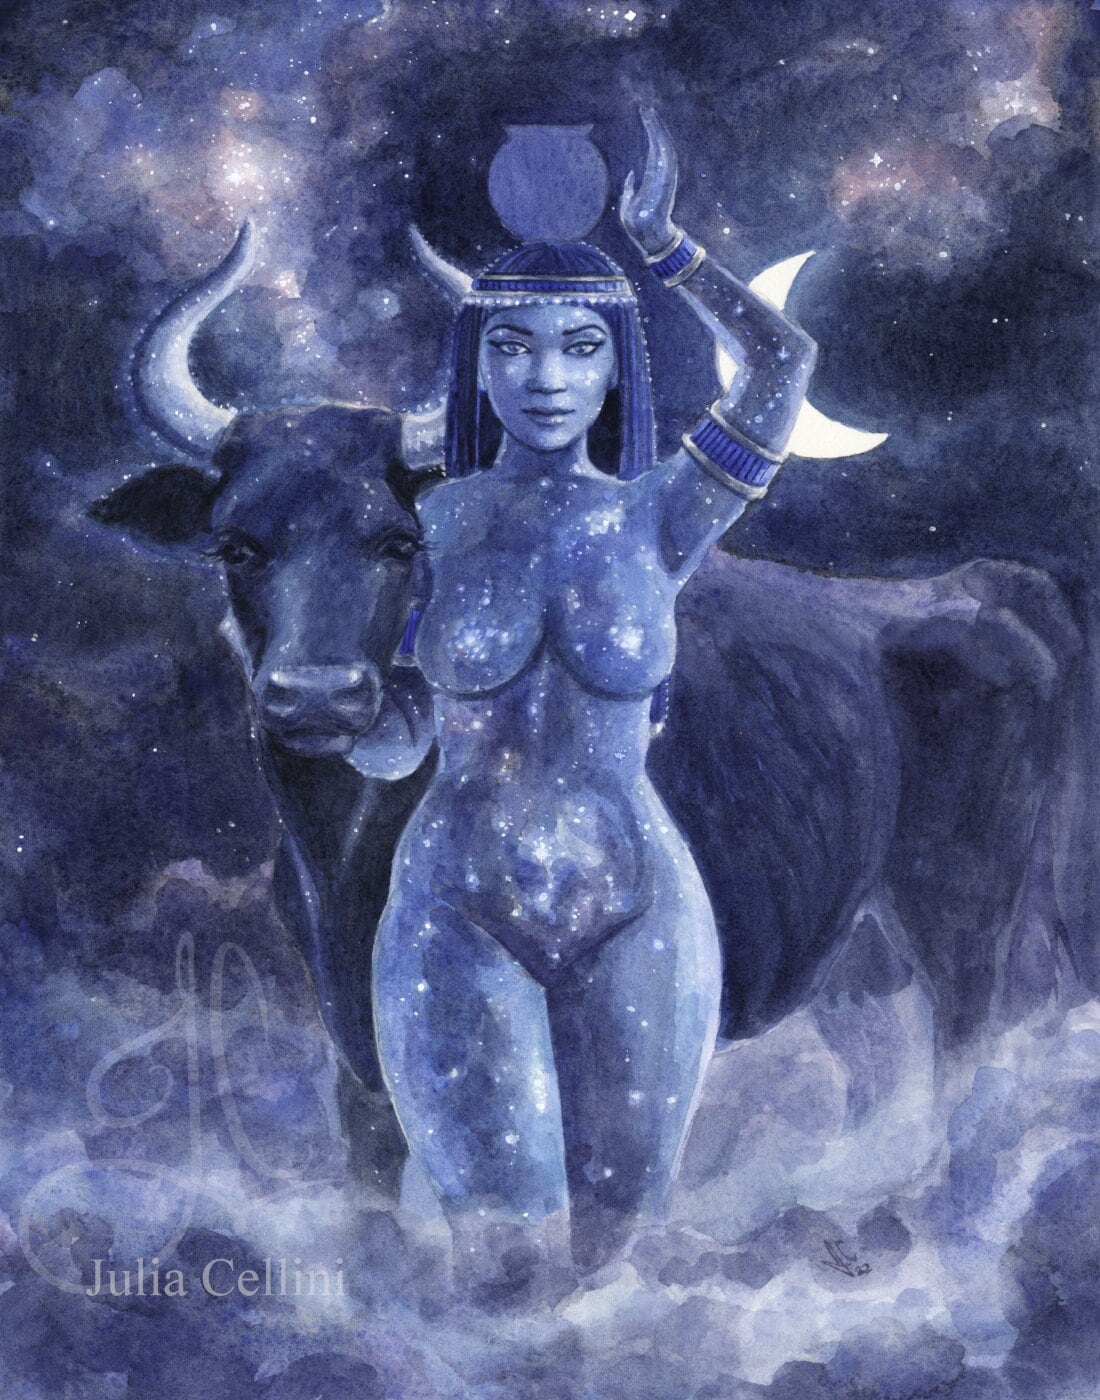 Yulla, Goddess of the Sky ~